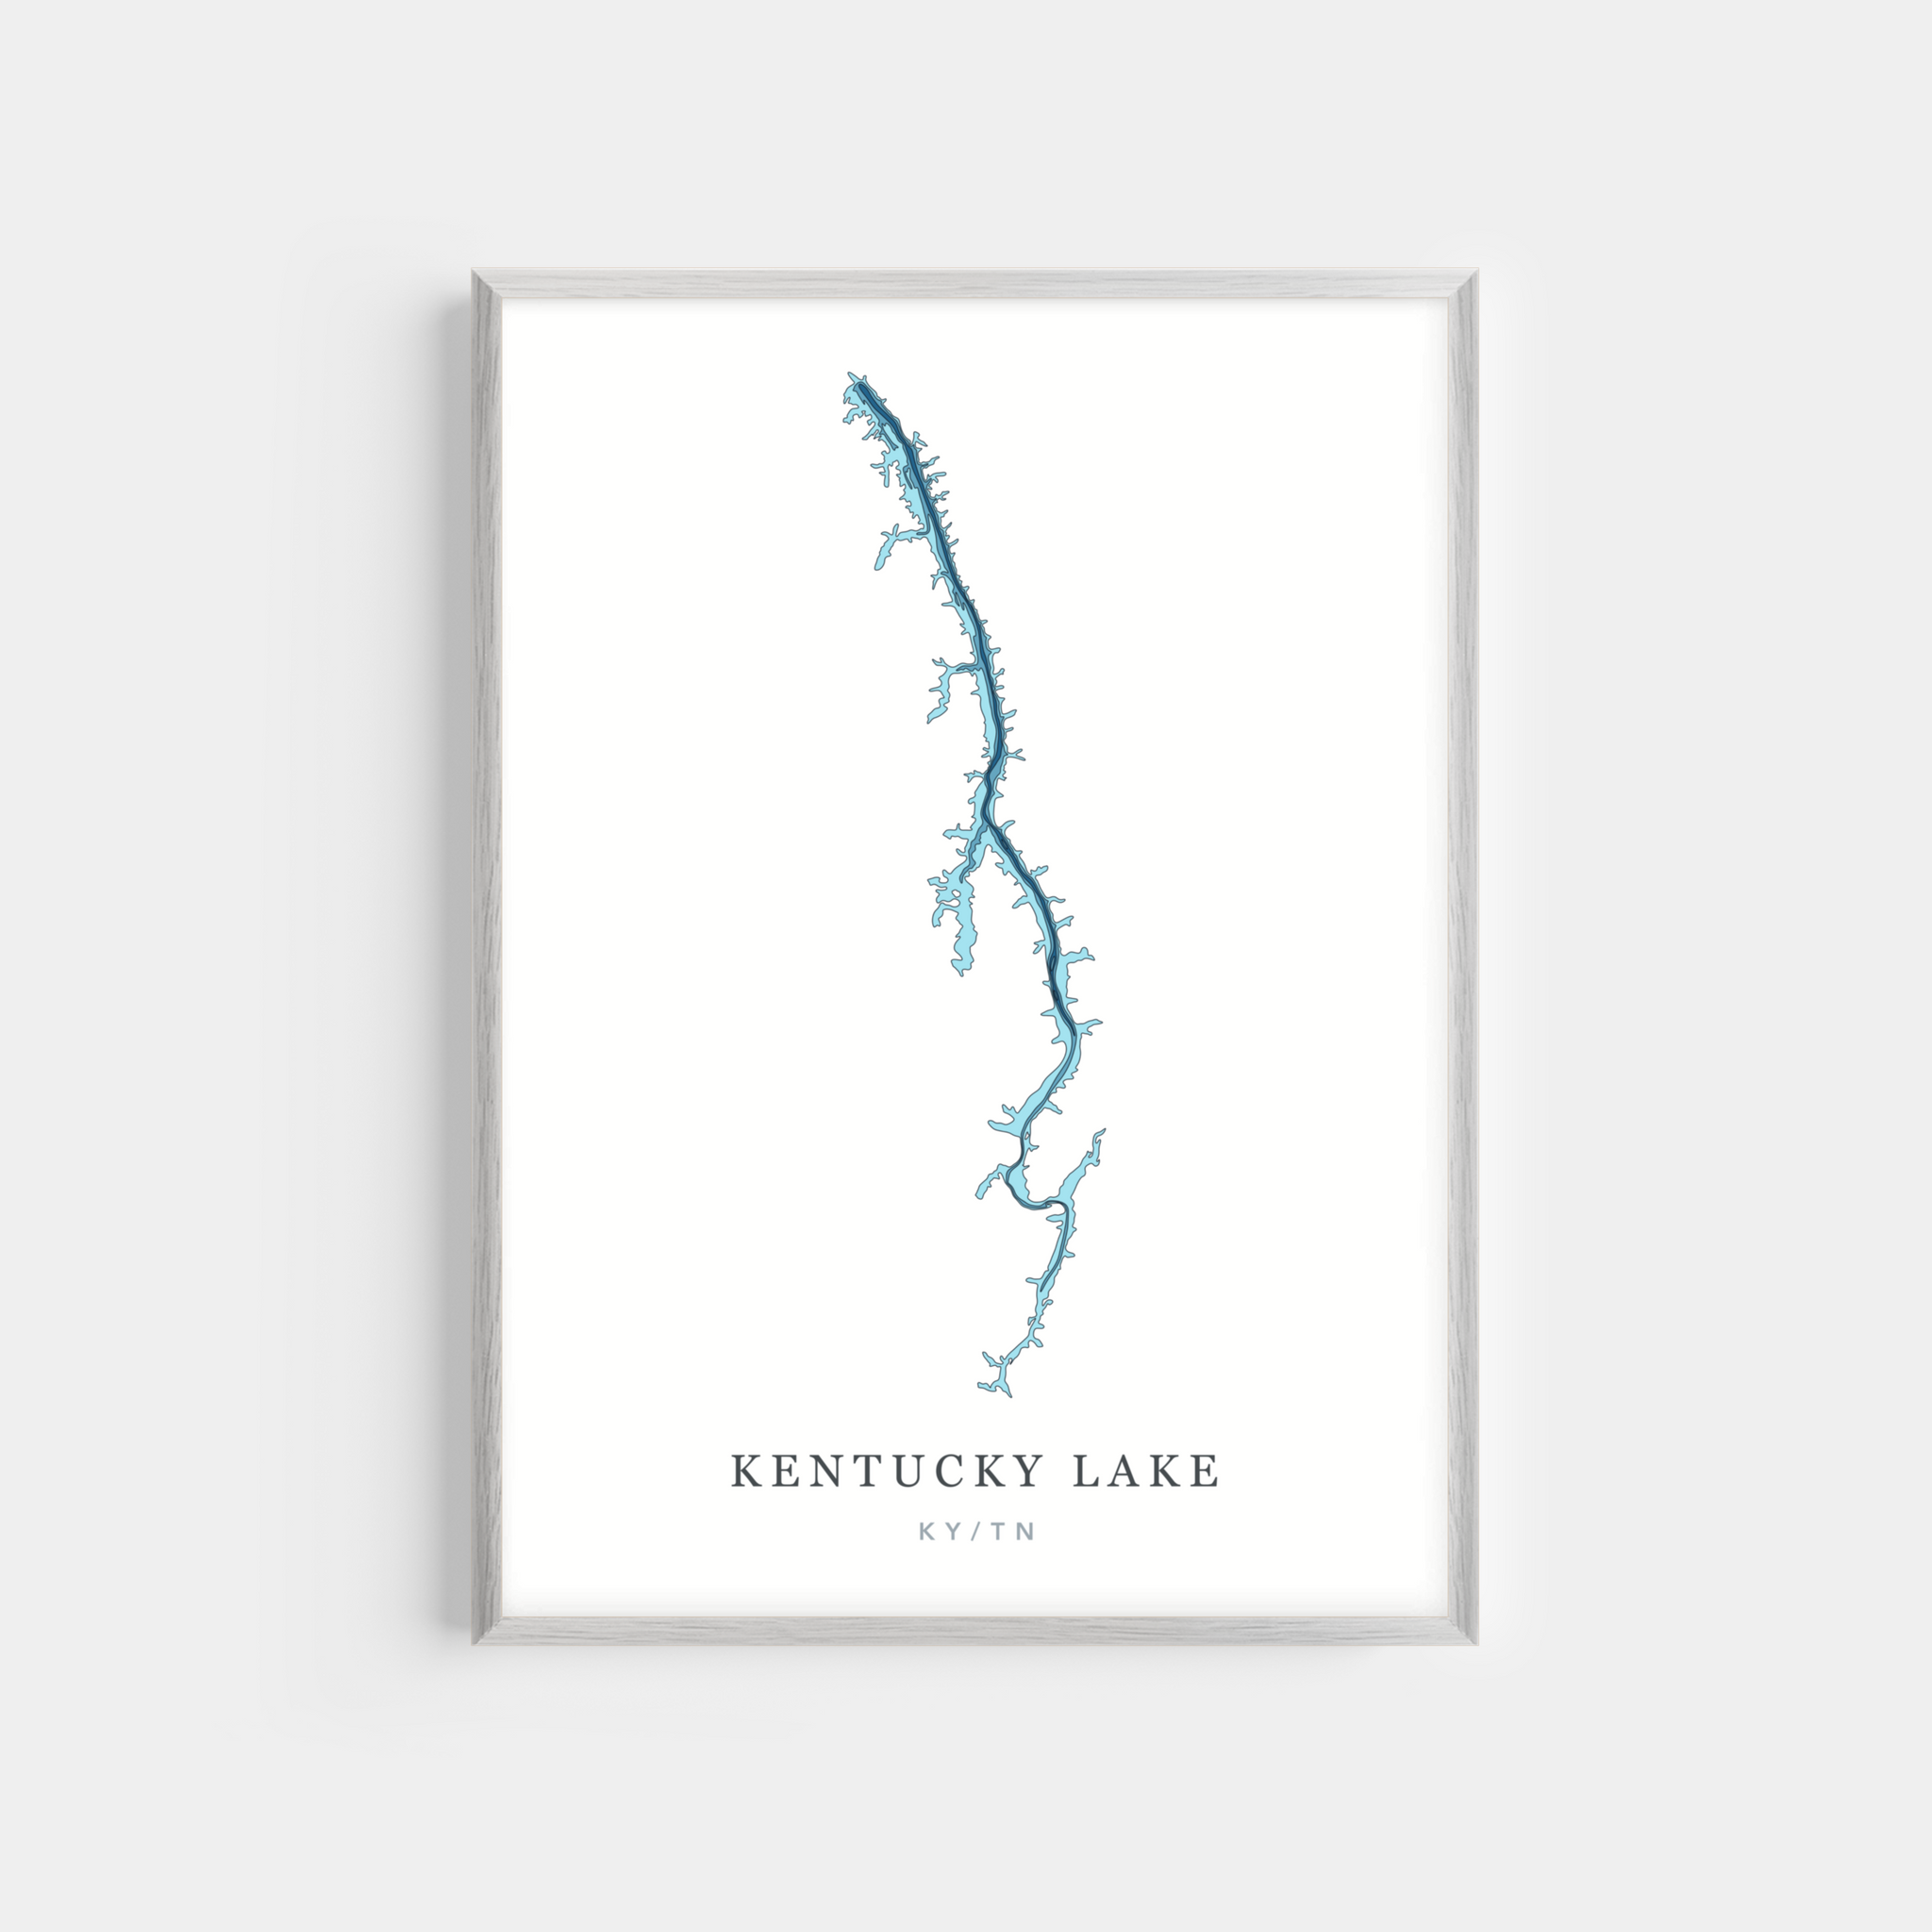 Kentucky Lake, KY/TN | Photo Print